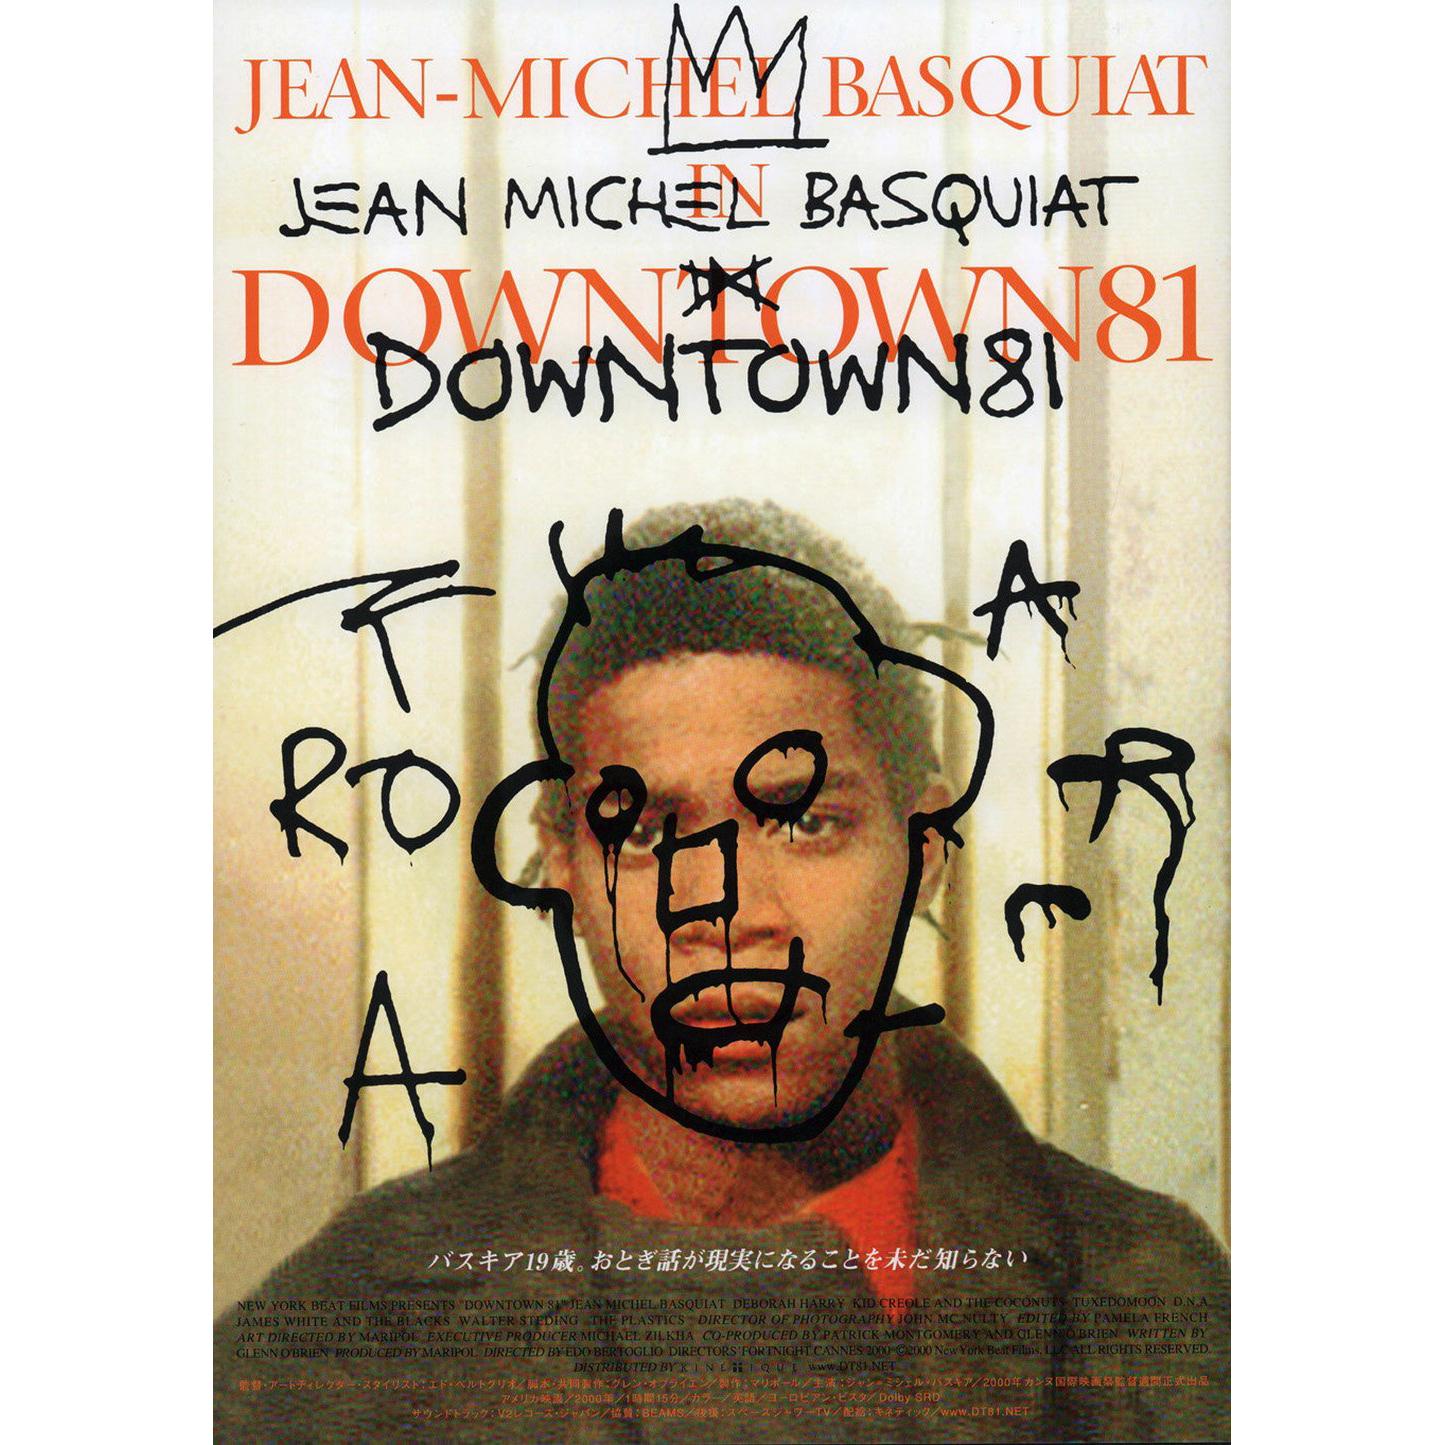 Basquiat Downtown 81 Film Poster